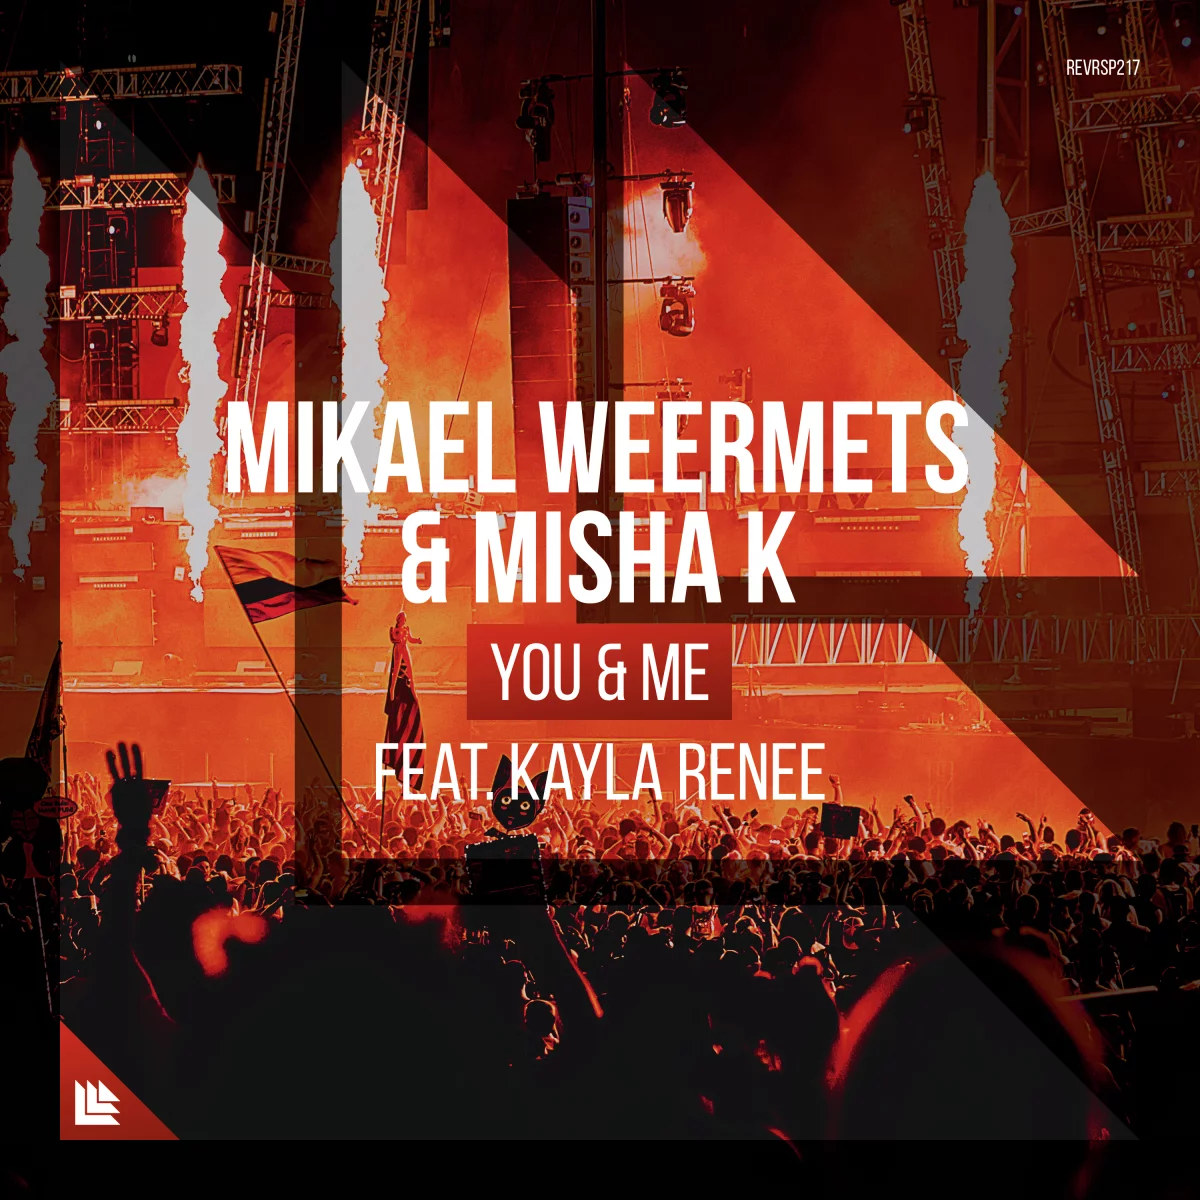 You & Me  - Mikael Weermets⁠ & Misha K⁠ feat. Kayla Renee⁠ 